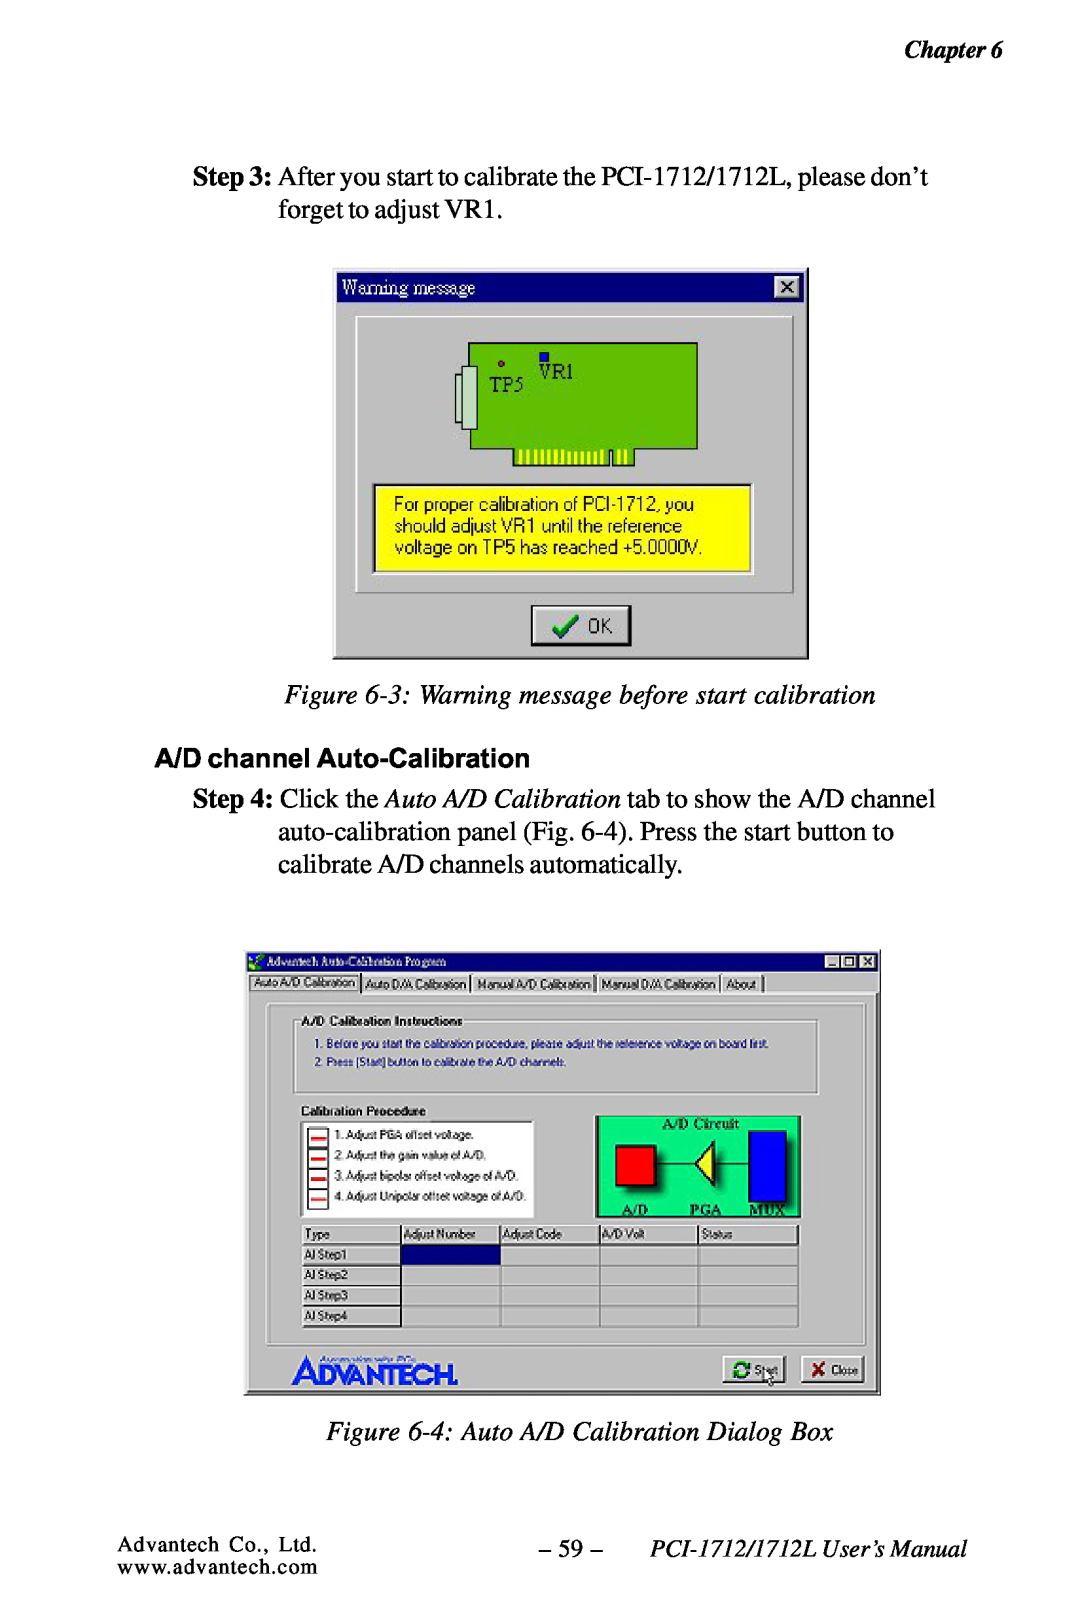 Konica Minolta PCI-1712L user manual 3 Warning message before start calibration, 4 Auto A/D Calibration Dialog Box 